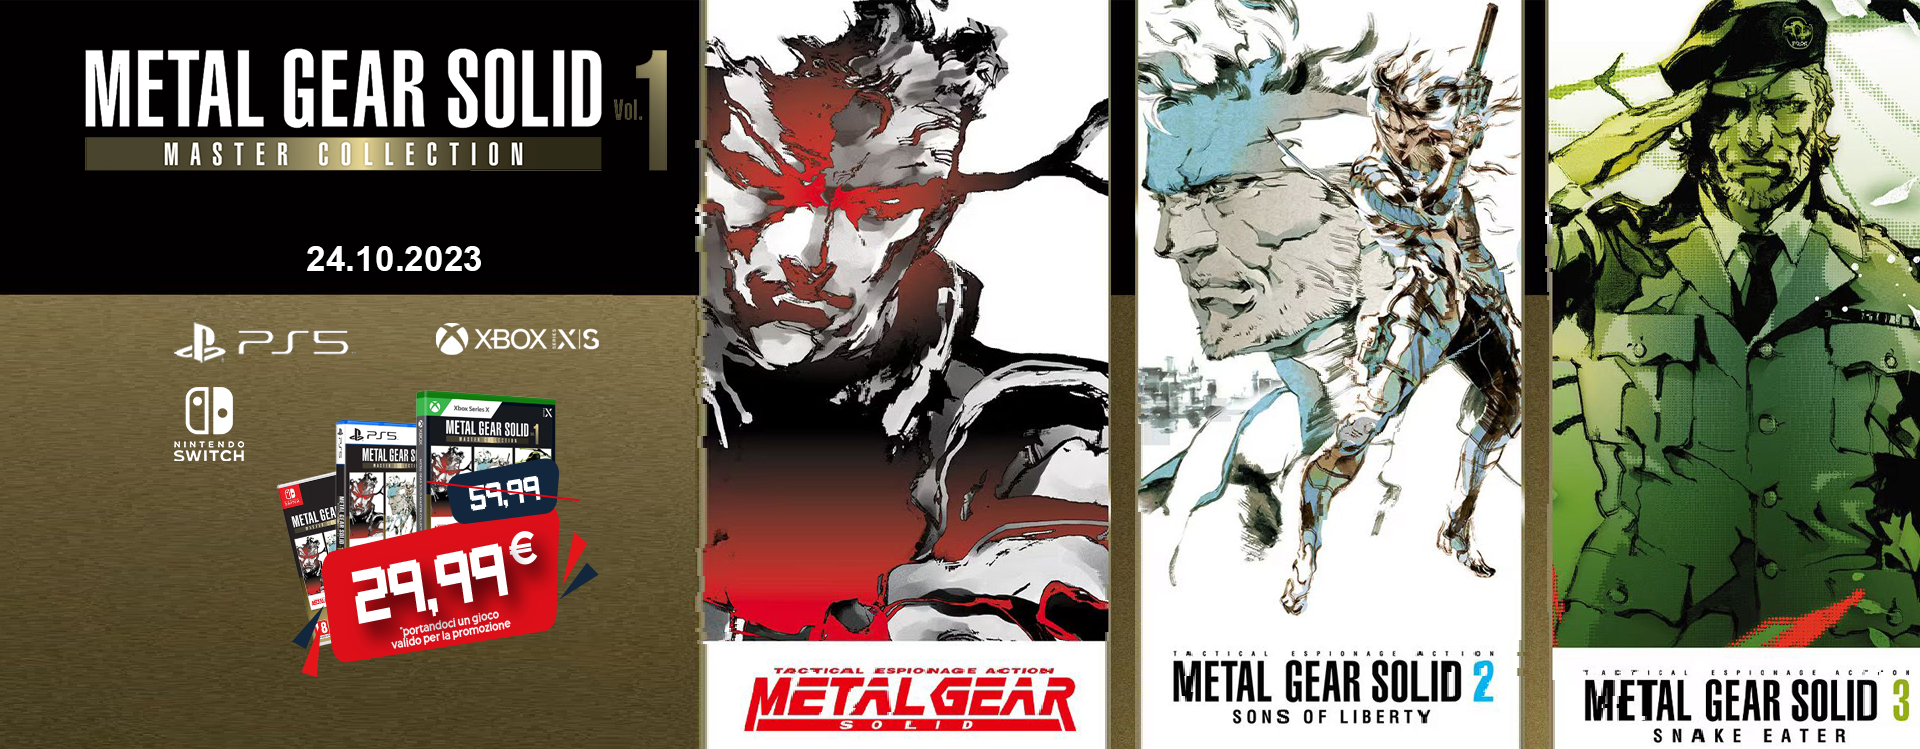 Offerta Metal Gear Solid Master Colletcion